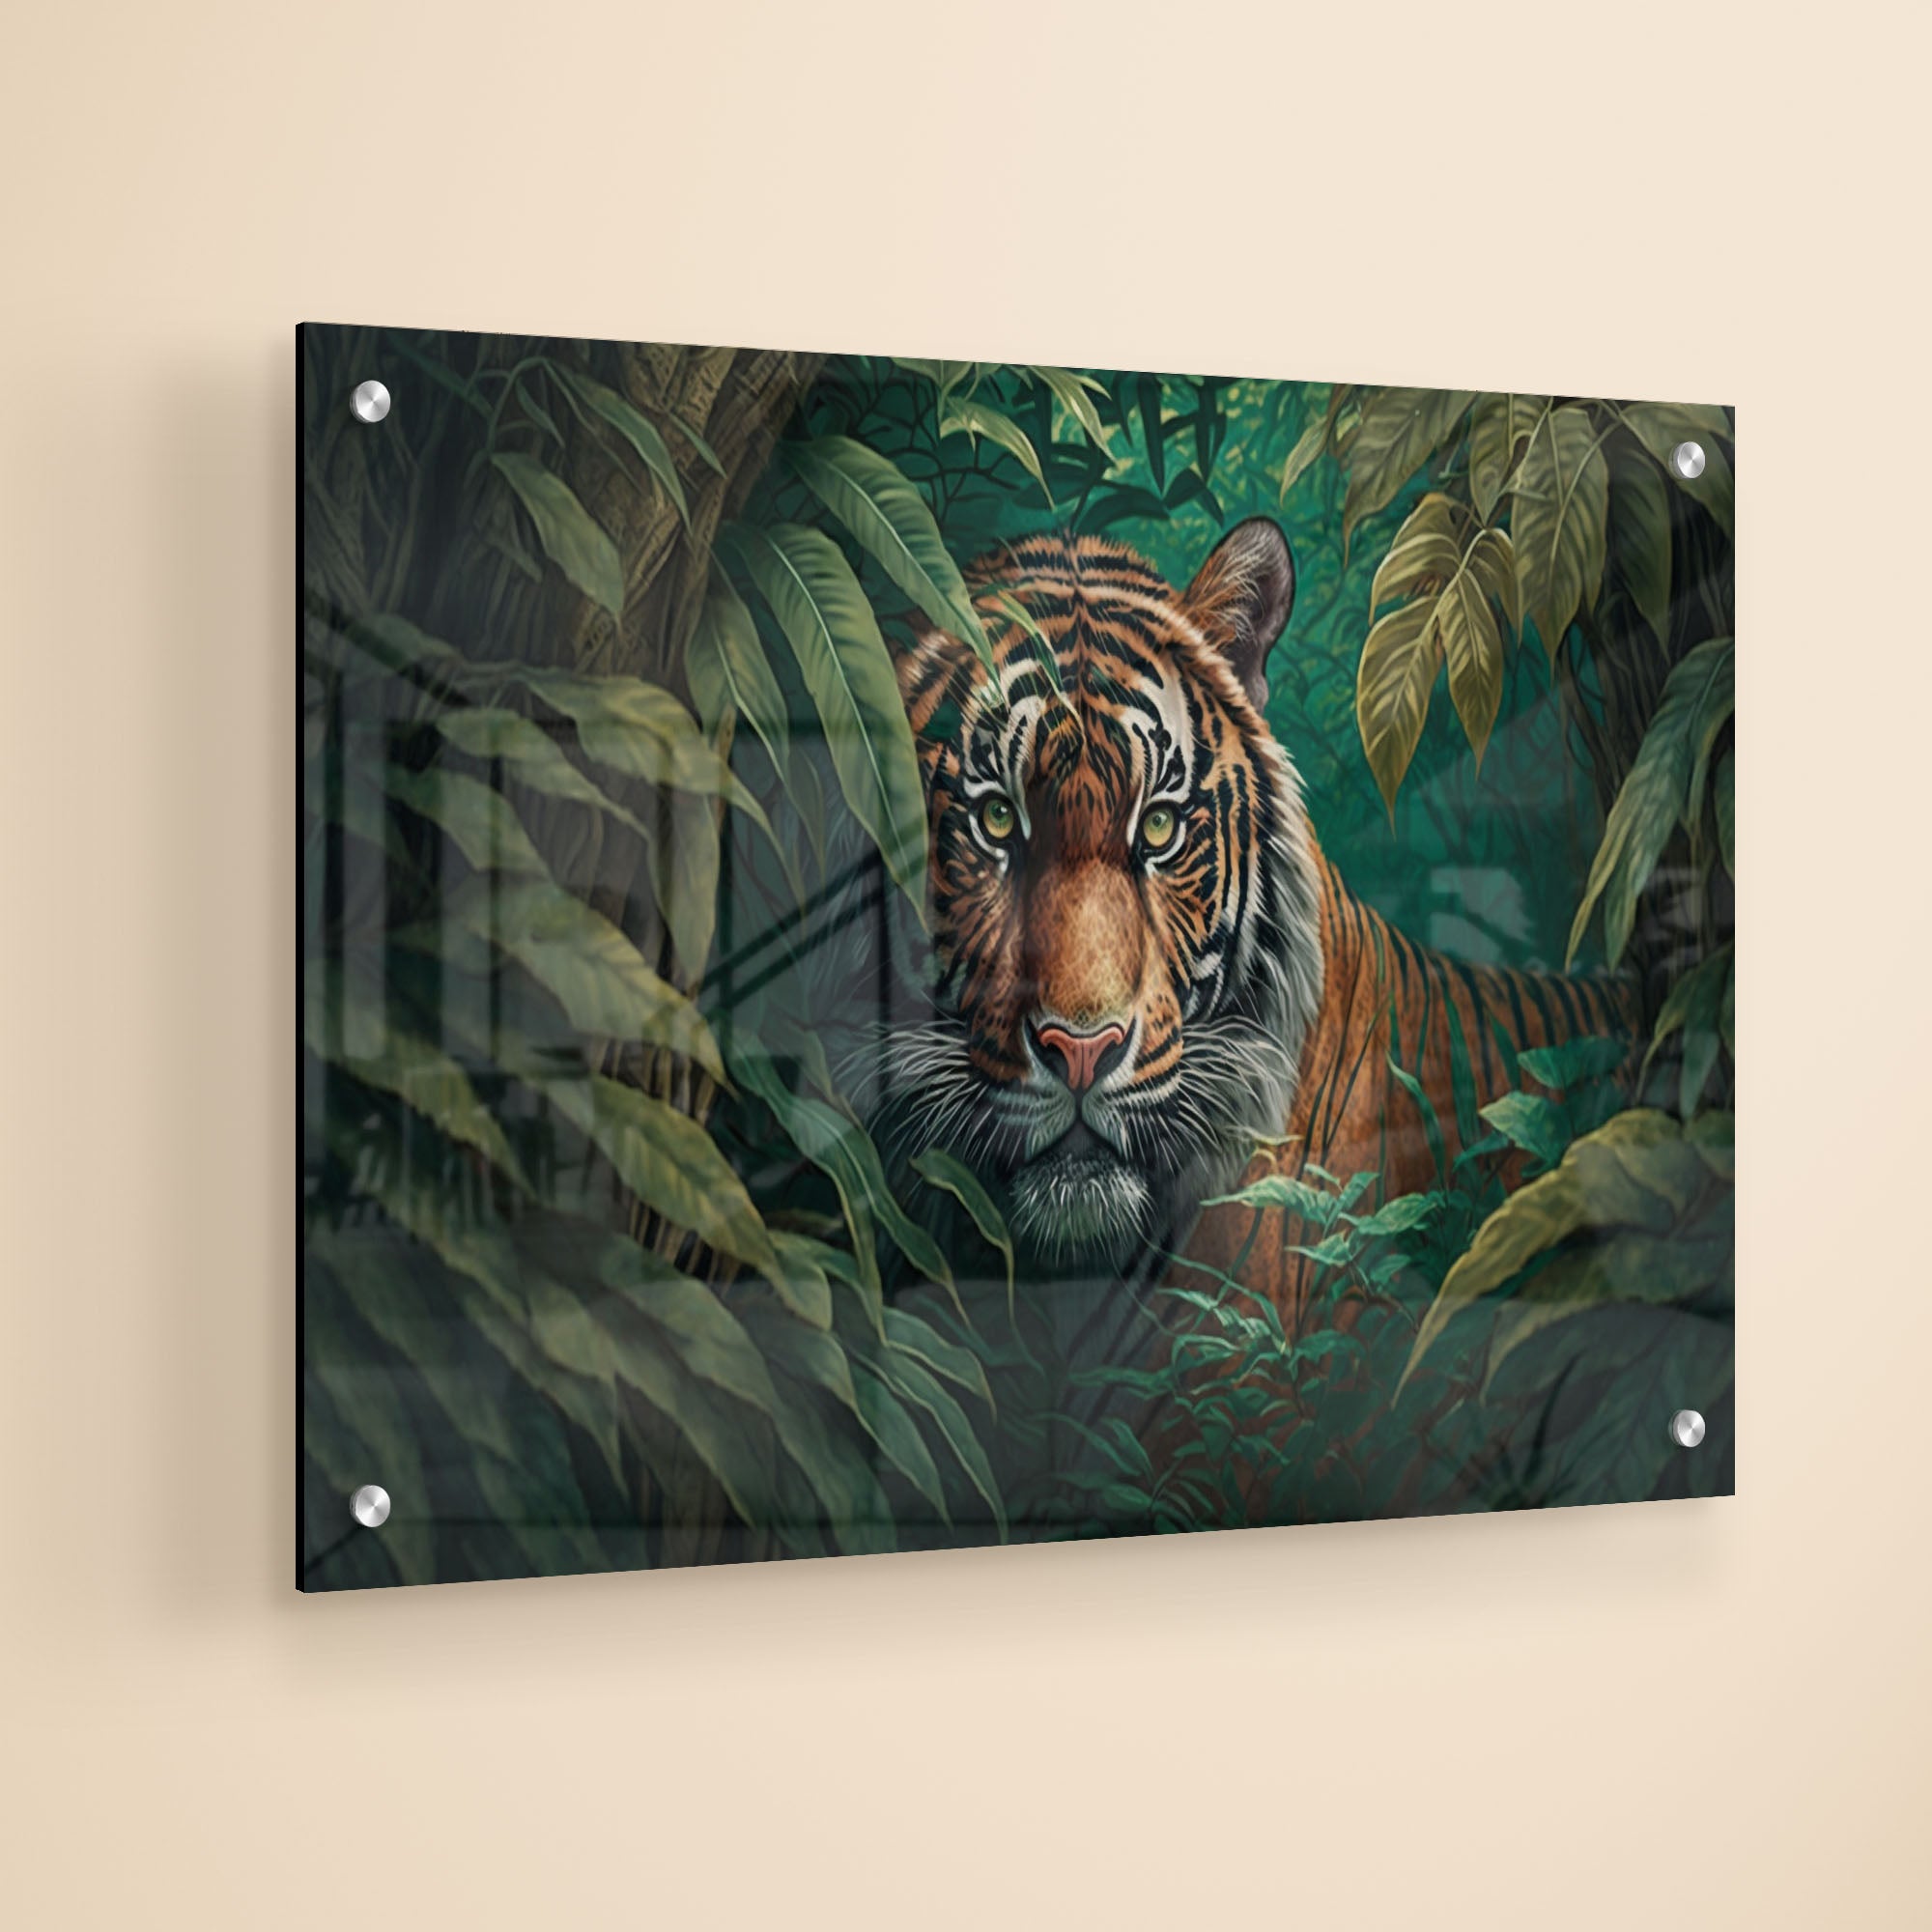 Jungle Tiger Acrylic Wall Painting